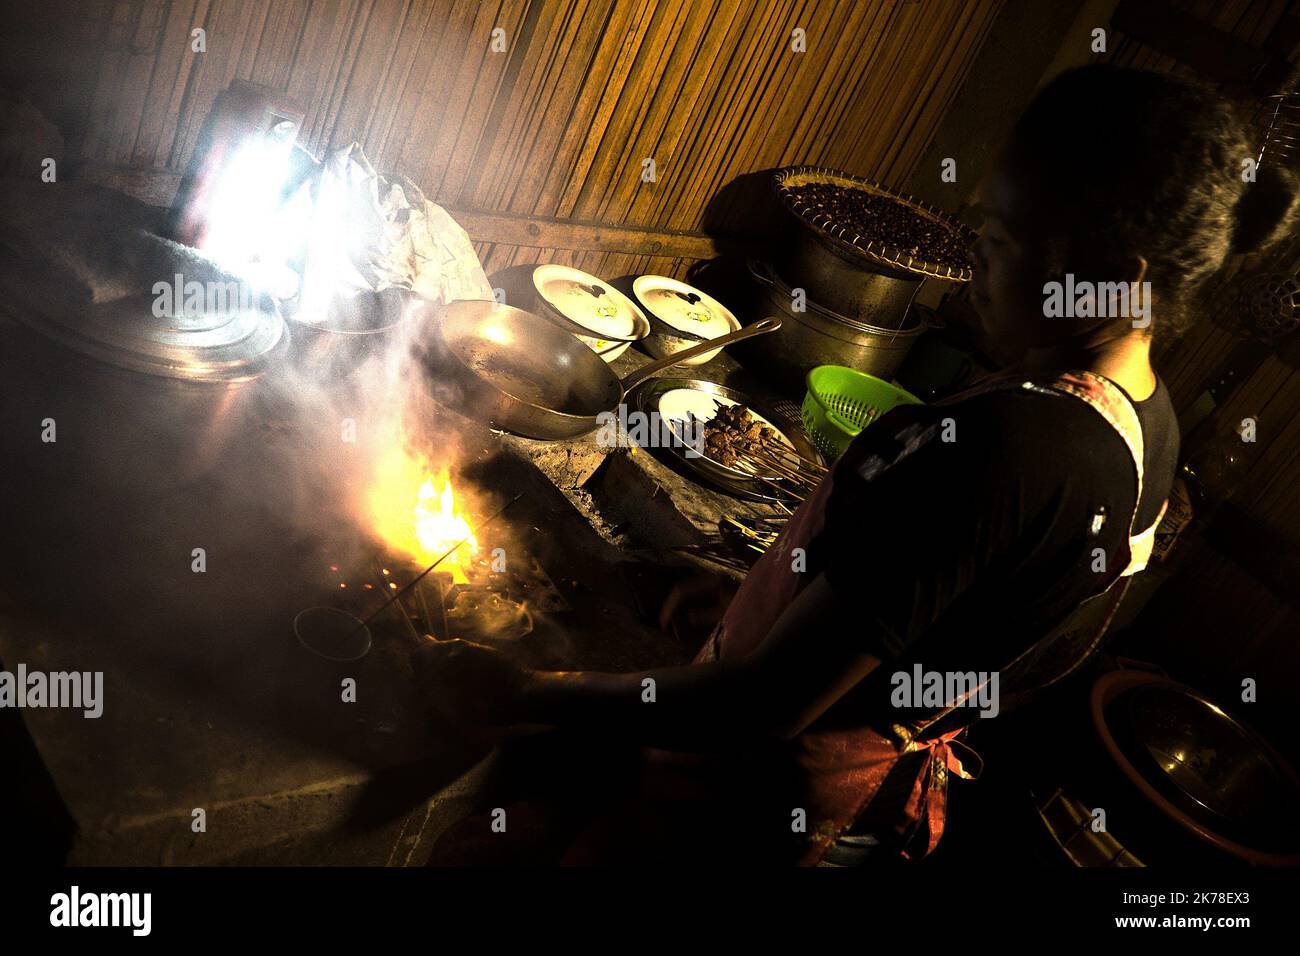 ©Arnaud De Grave / Le Pictorium/MAXPPP - Arnaud De Grave / Le Pictorium - 07/11/2015  -  Madagascar / Alaotra-Mangoro  -  Cuisiniere dans la fumee...  / 07/11/2015  -  Madagascar / Alaotra-Mangoro  -  Cook in the smoke... Stock Photo